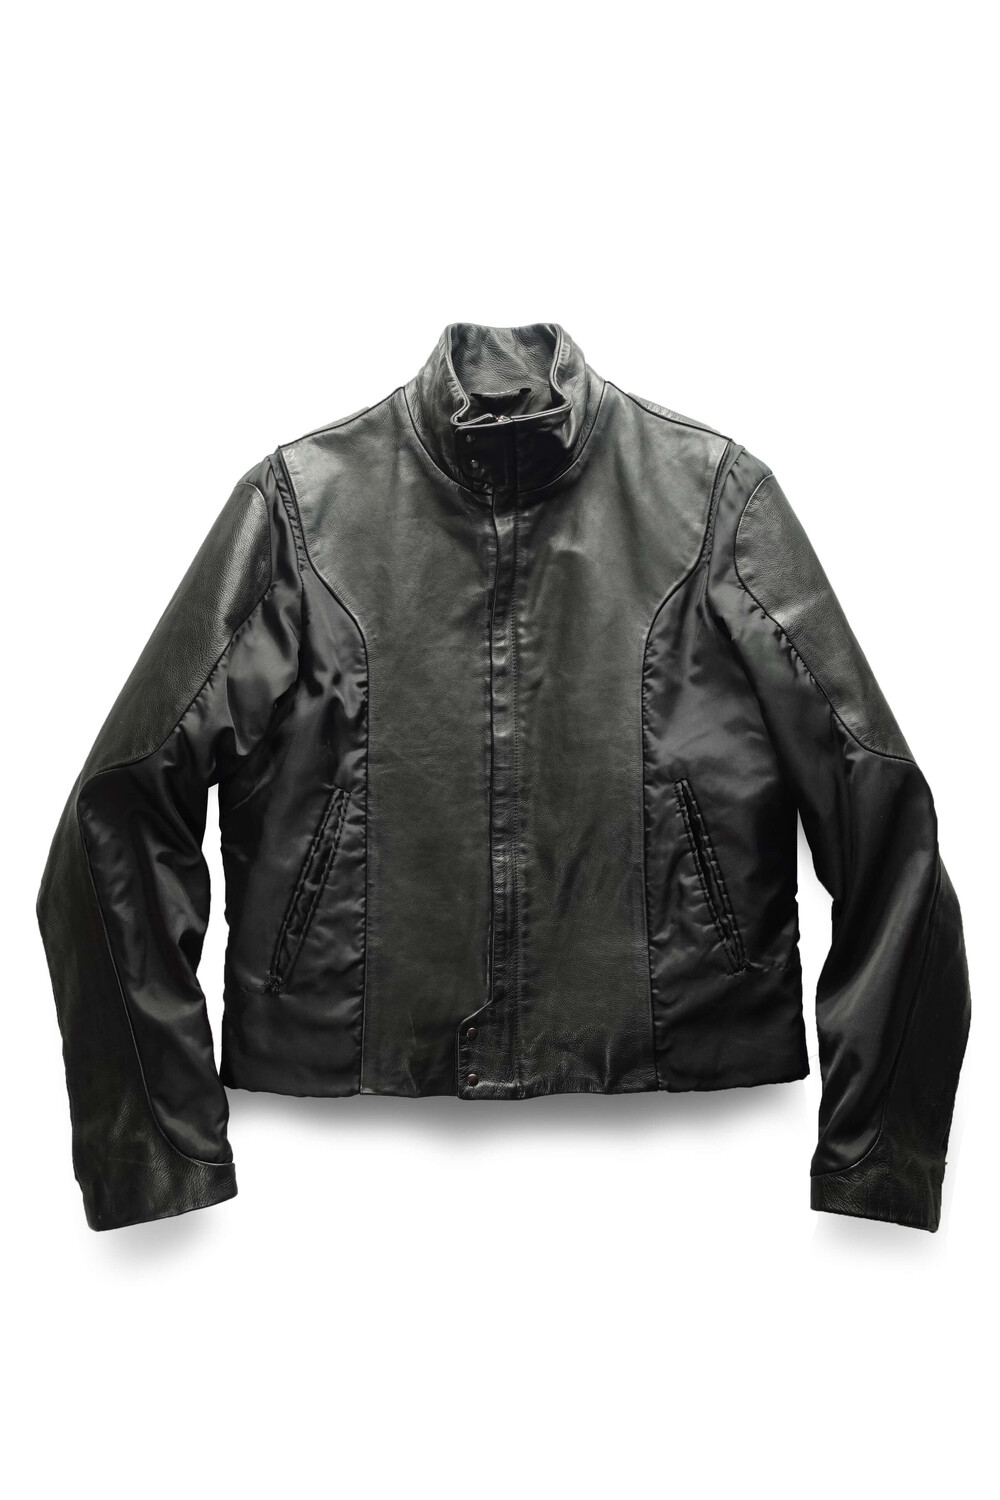 christian lacroix leather + nylon jacket